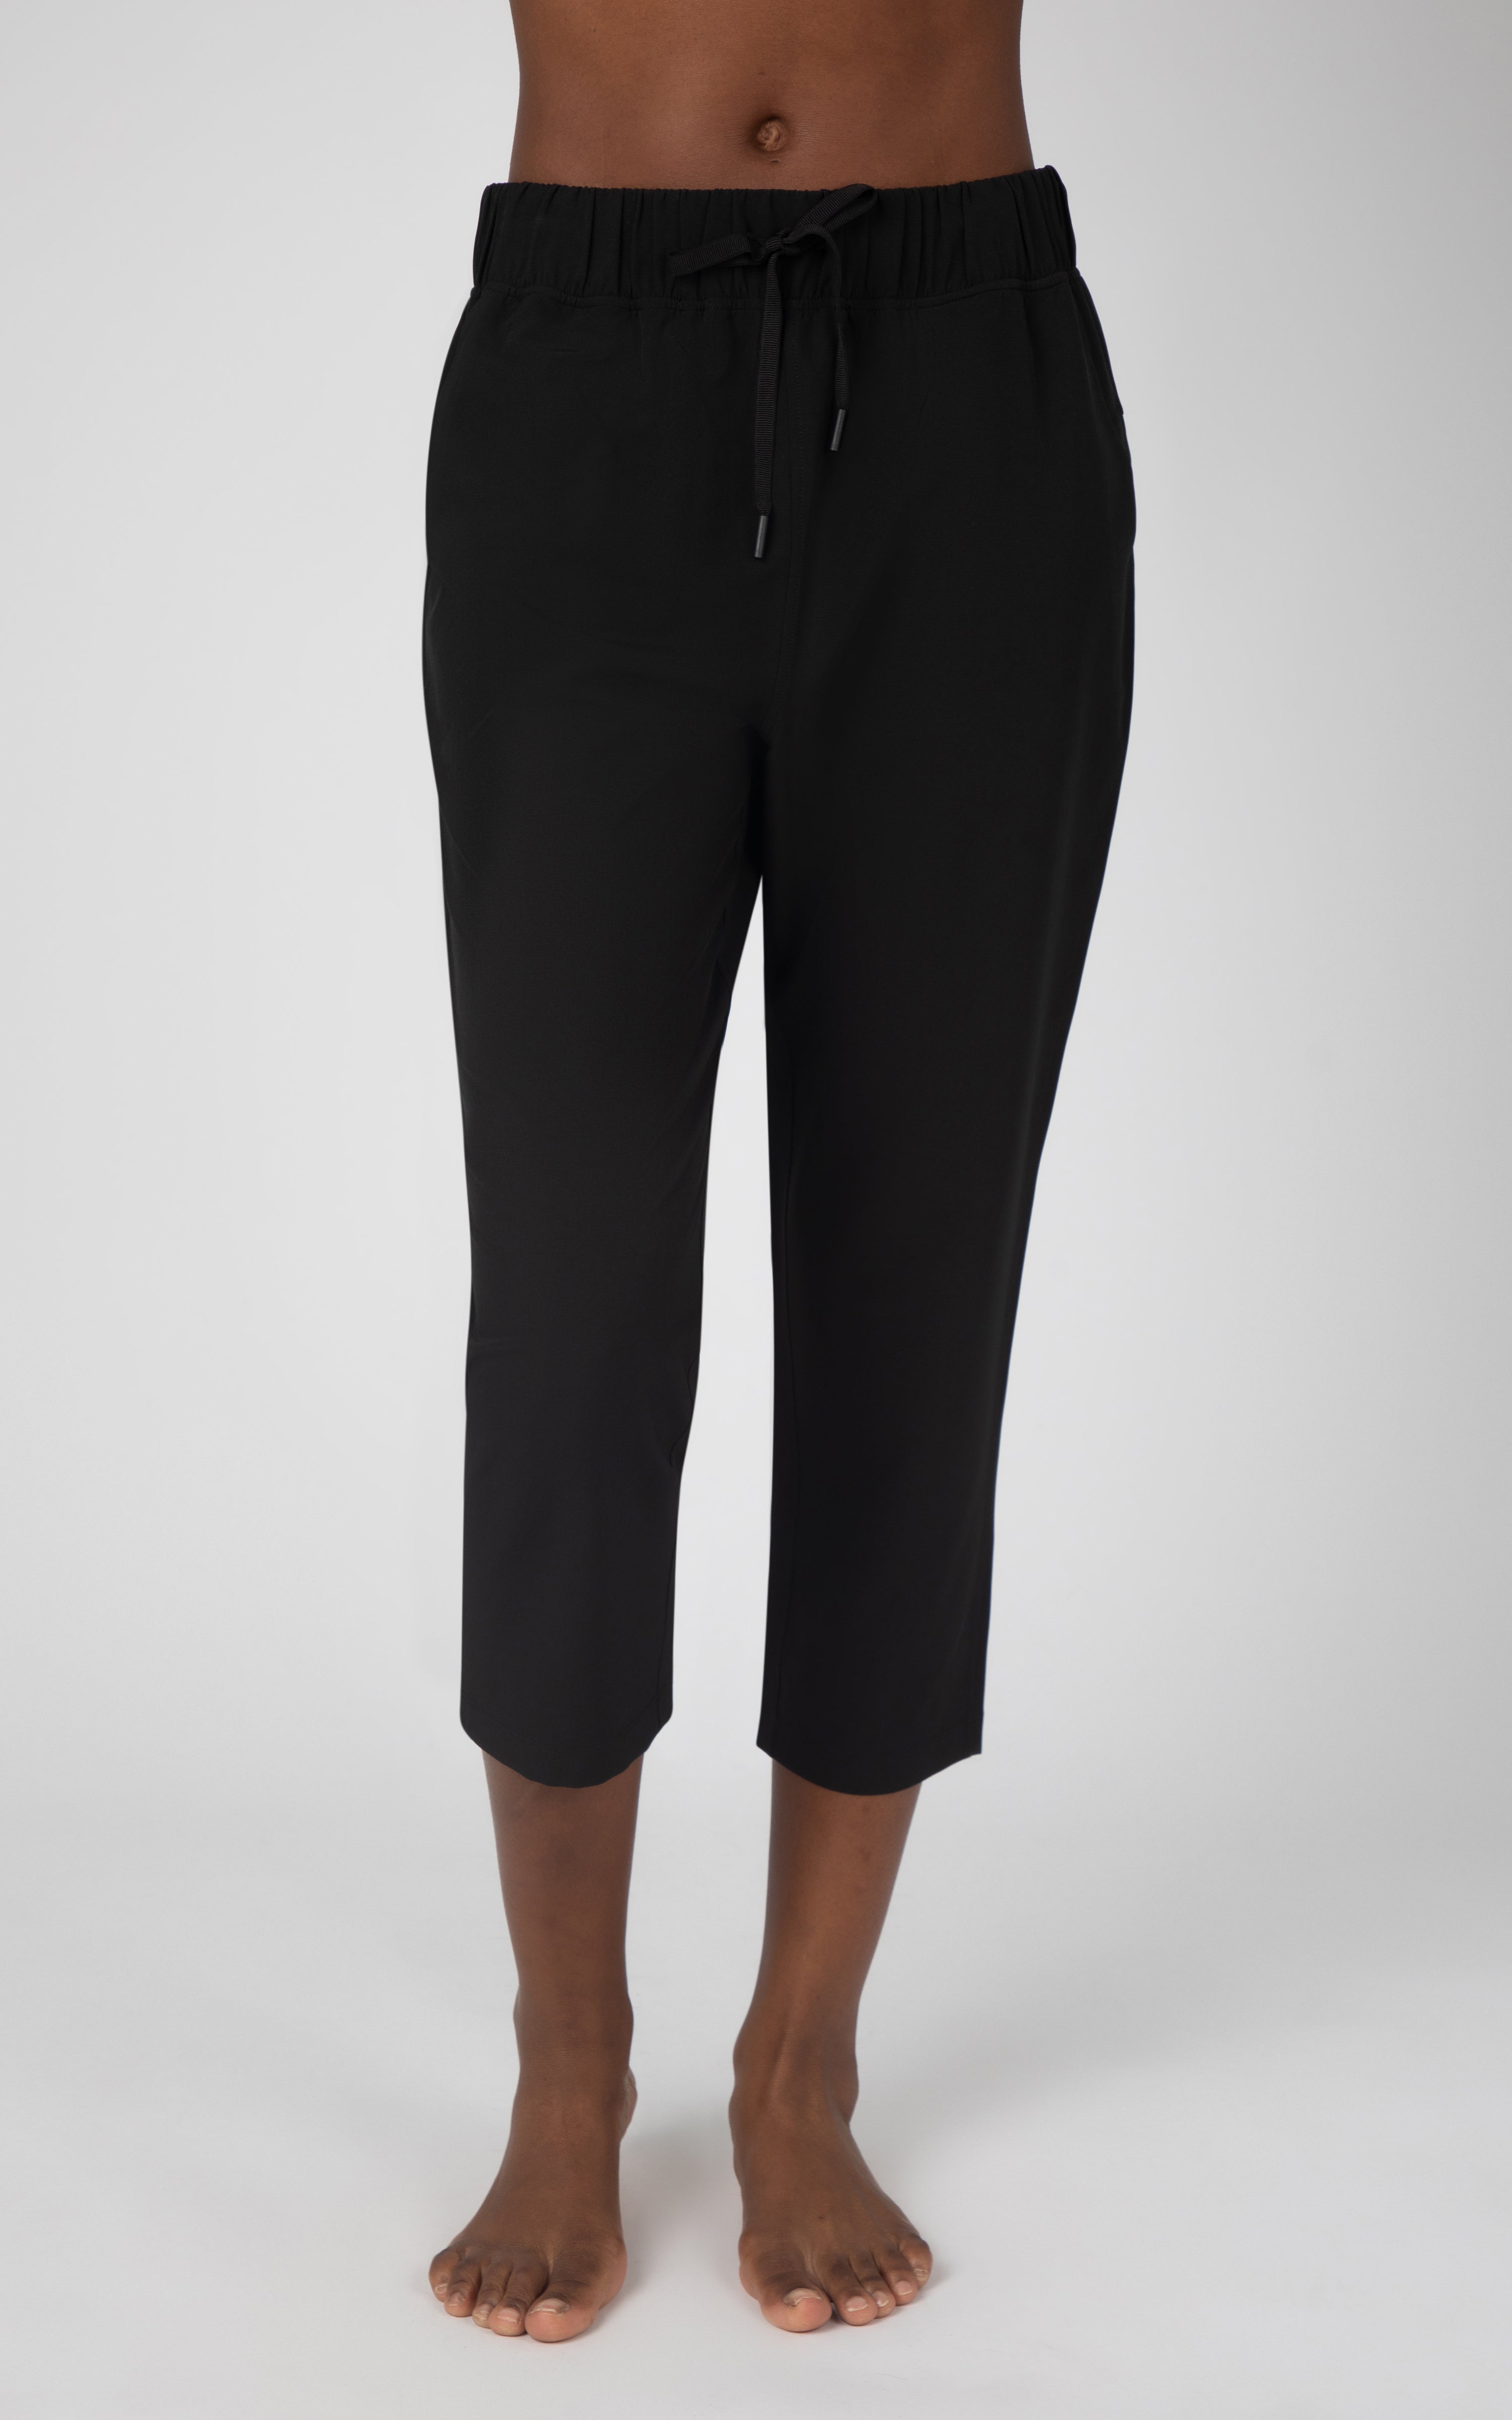 Reflex 90 Degree Women's Elastic Waist Pull On Athletic Travel Capri Pants ( Black, S) 